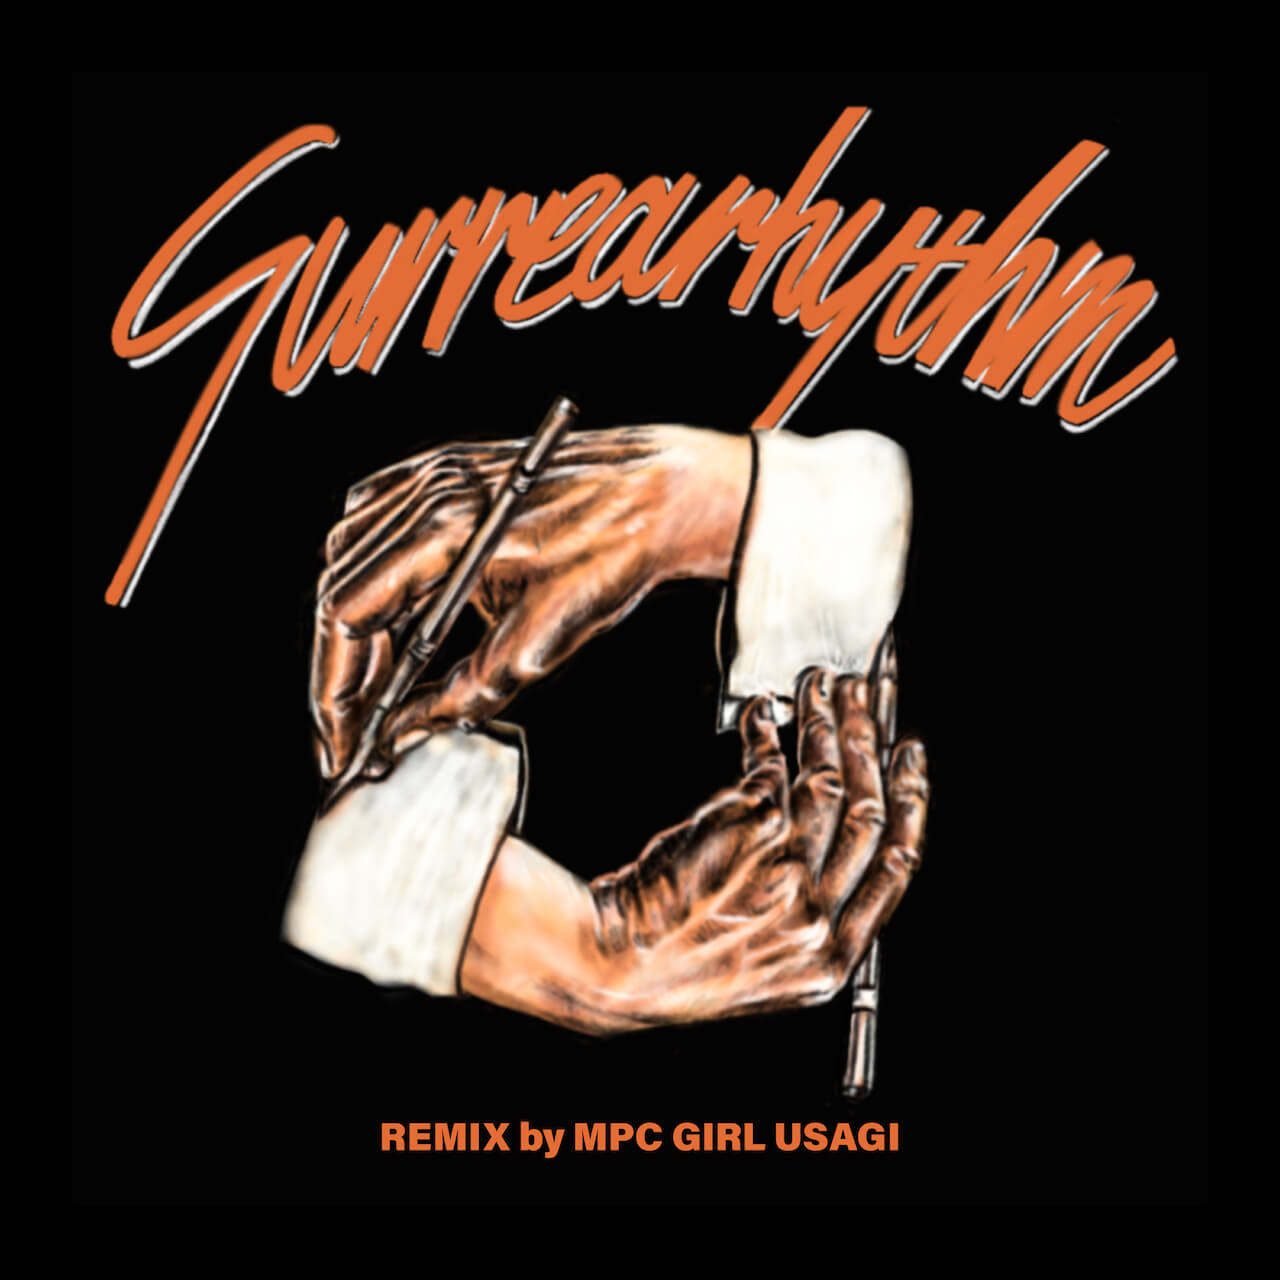 SANABAGUN.岩間俊樹の2ndAL『Surrearhythm』全曲をMPC GIRL USAGIがリミックス、12月11日にリリース music211208-liberal-1